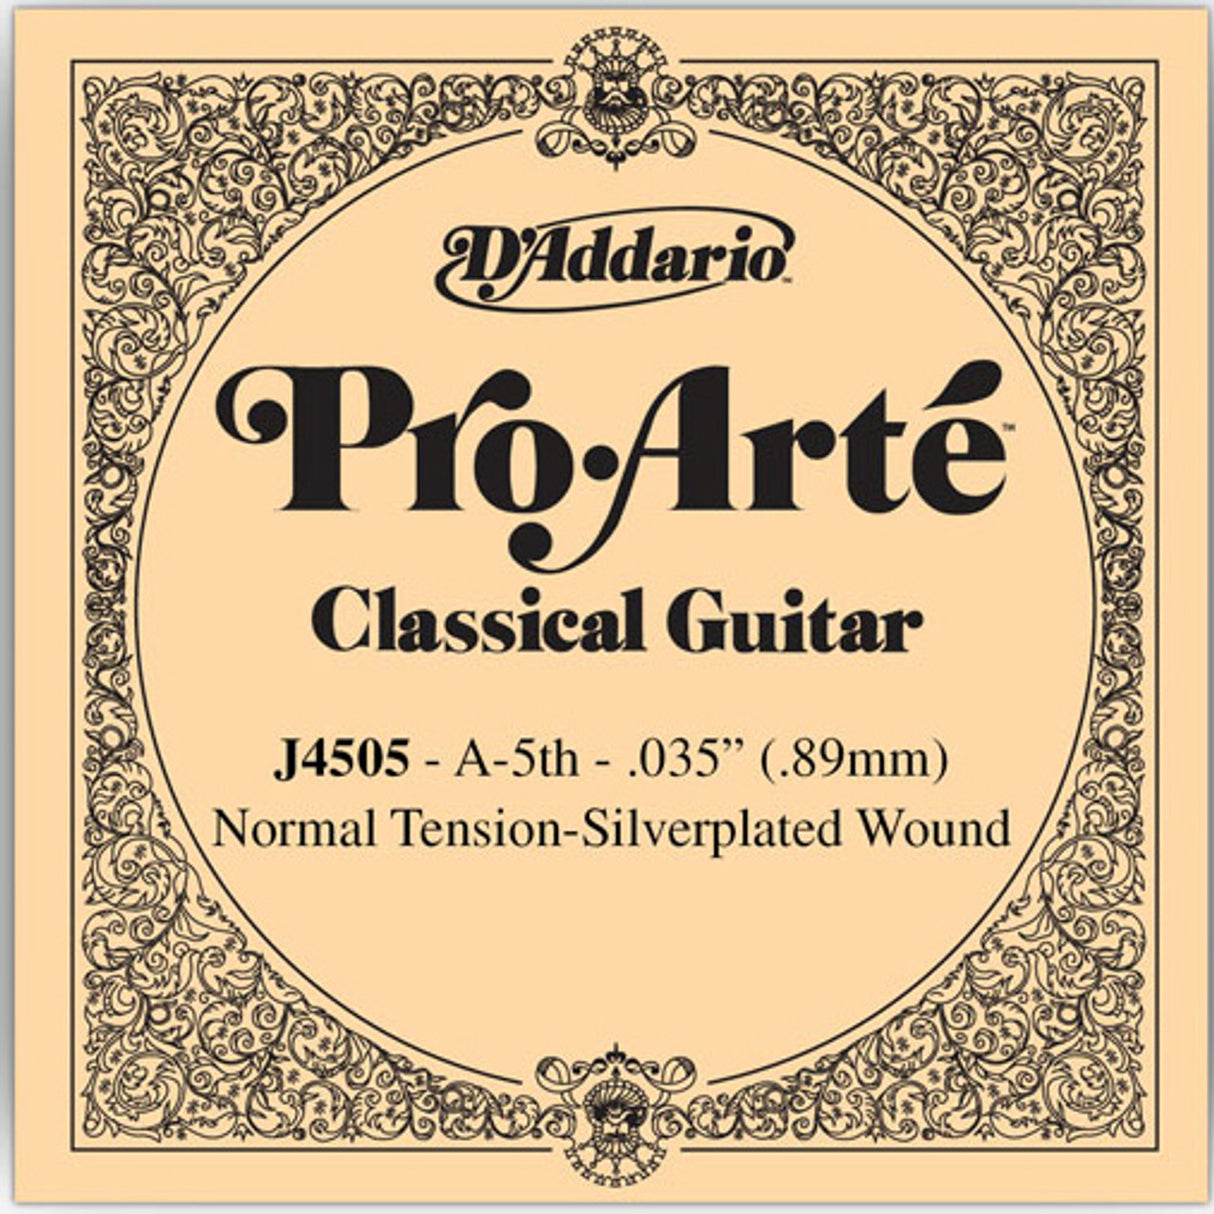 D'Addario Pro Arte Single Classical Guitar Strings - Normal Tension A 5th